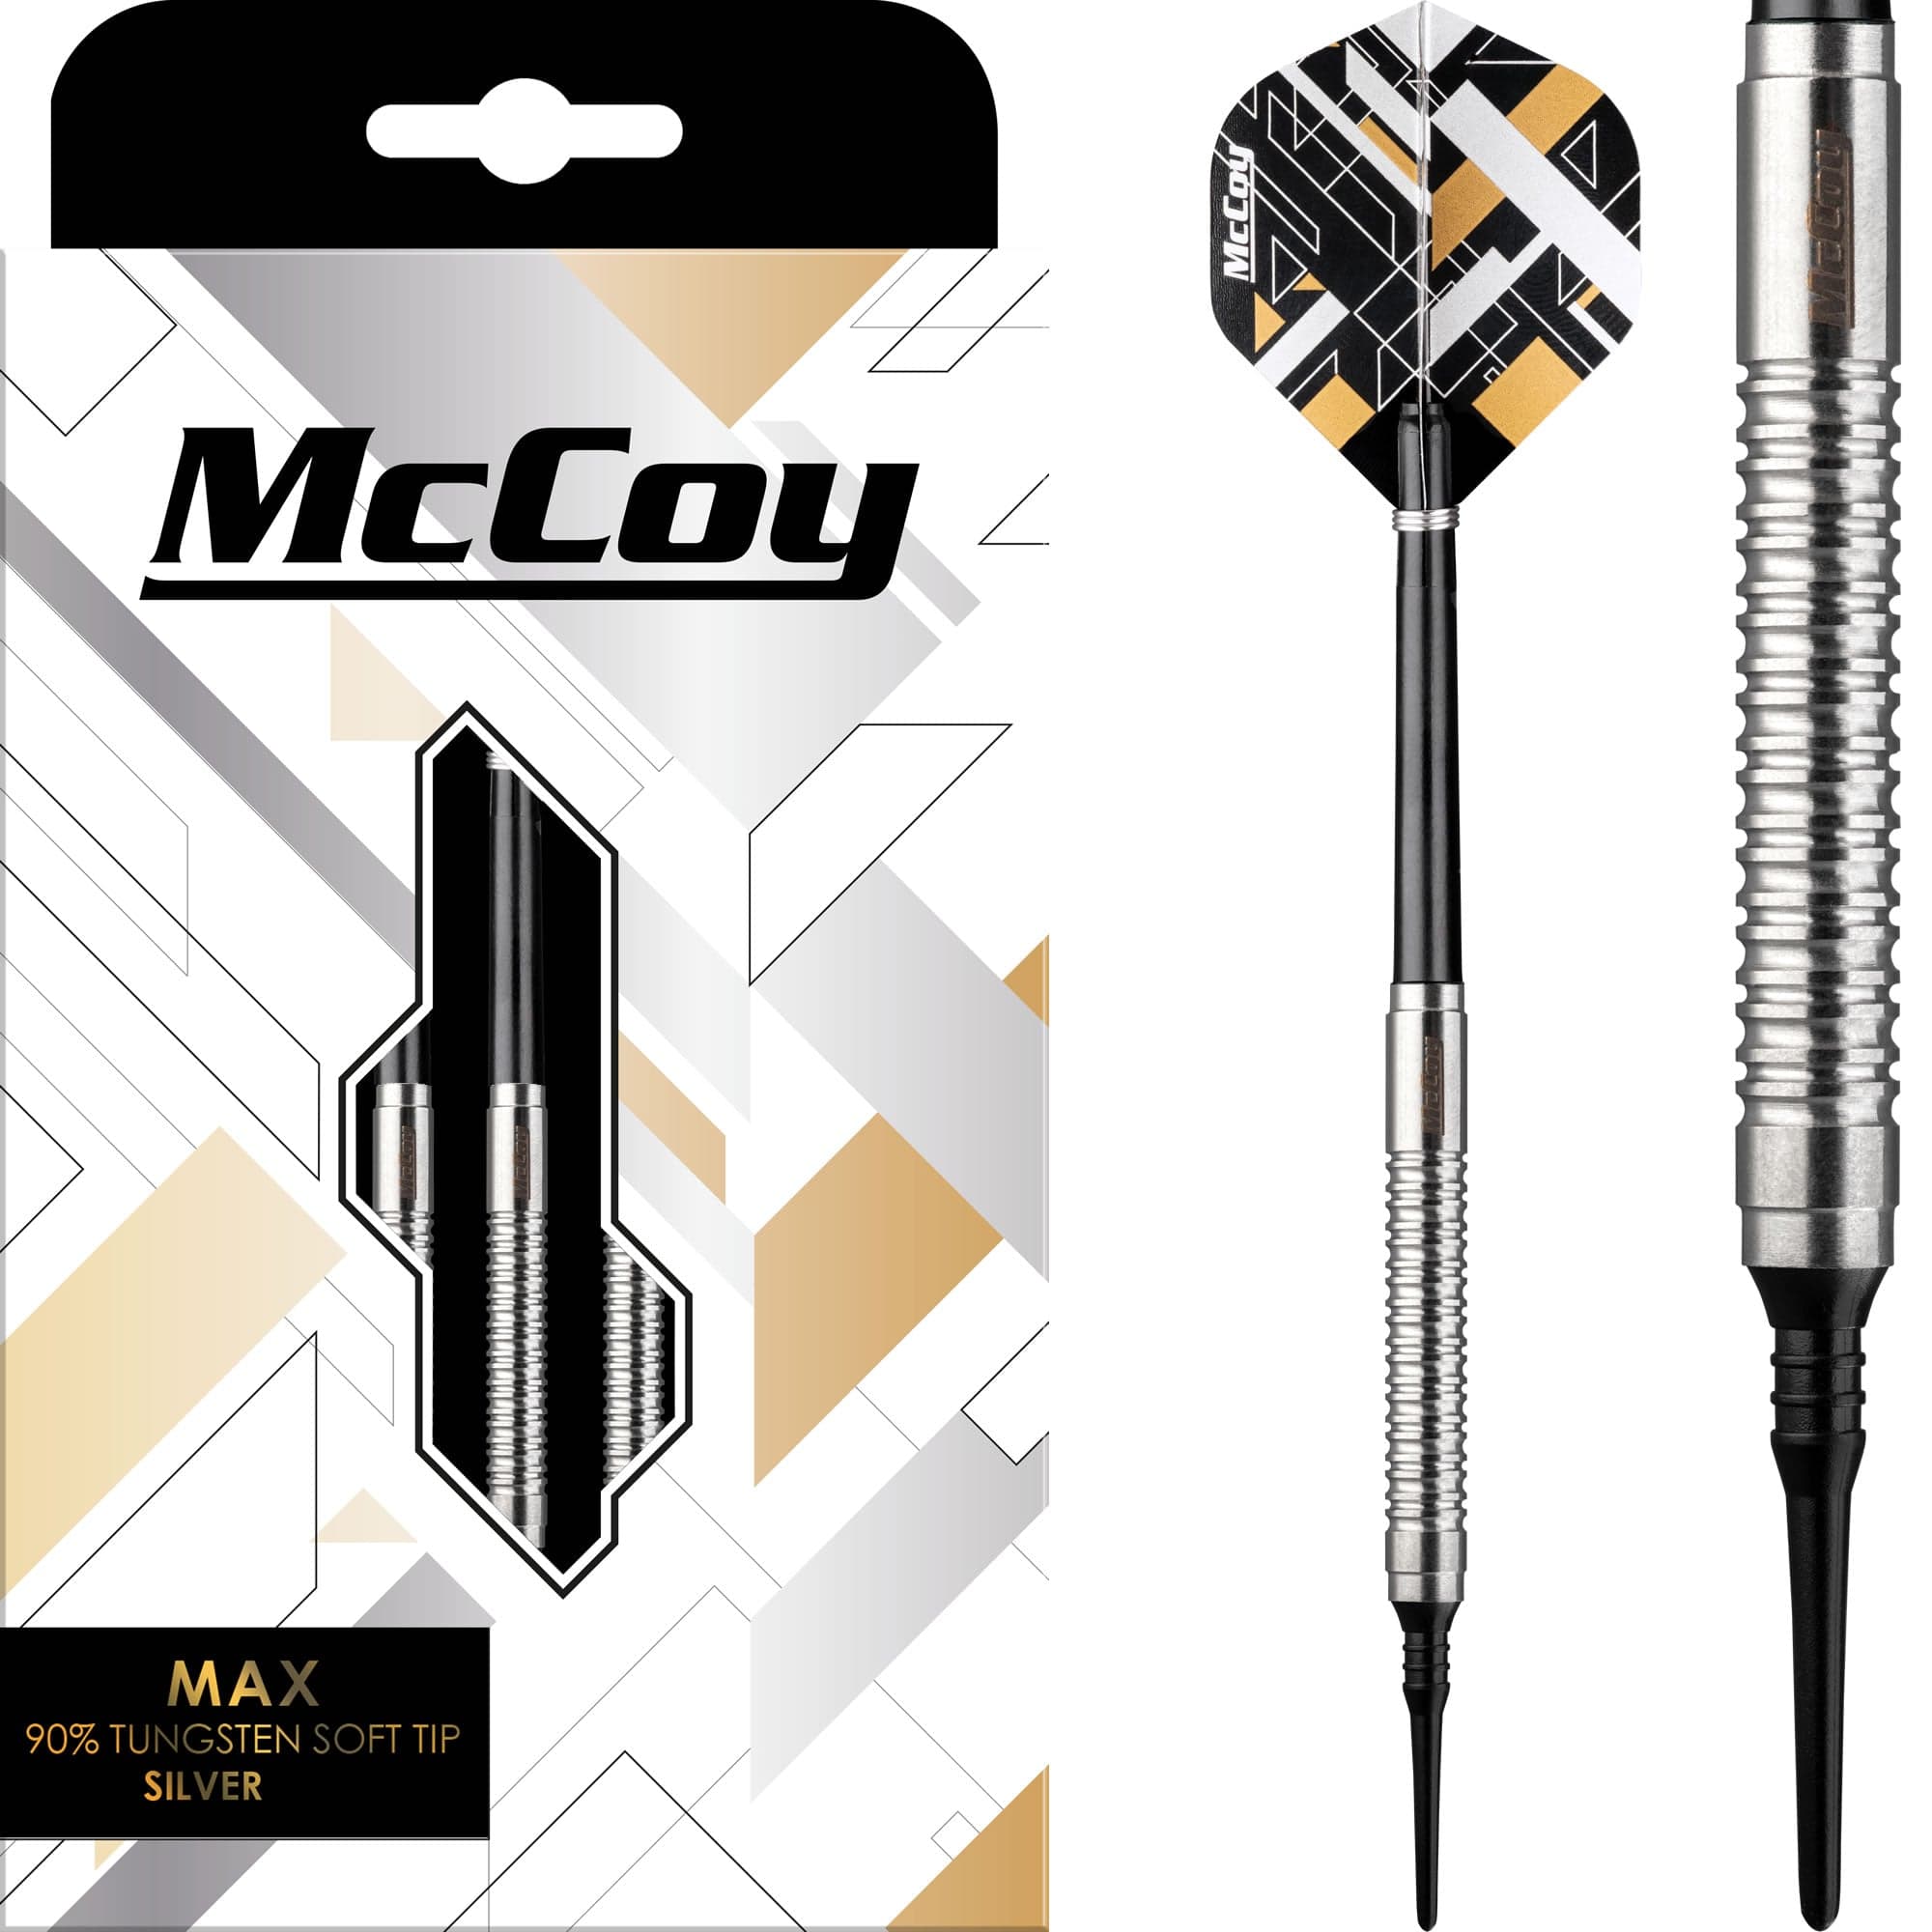 McCoy MAX - 90% Soft Tip Tungsten - Silver